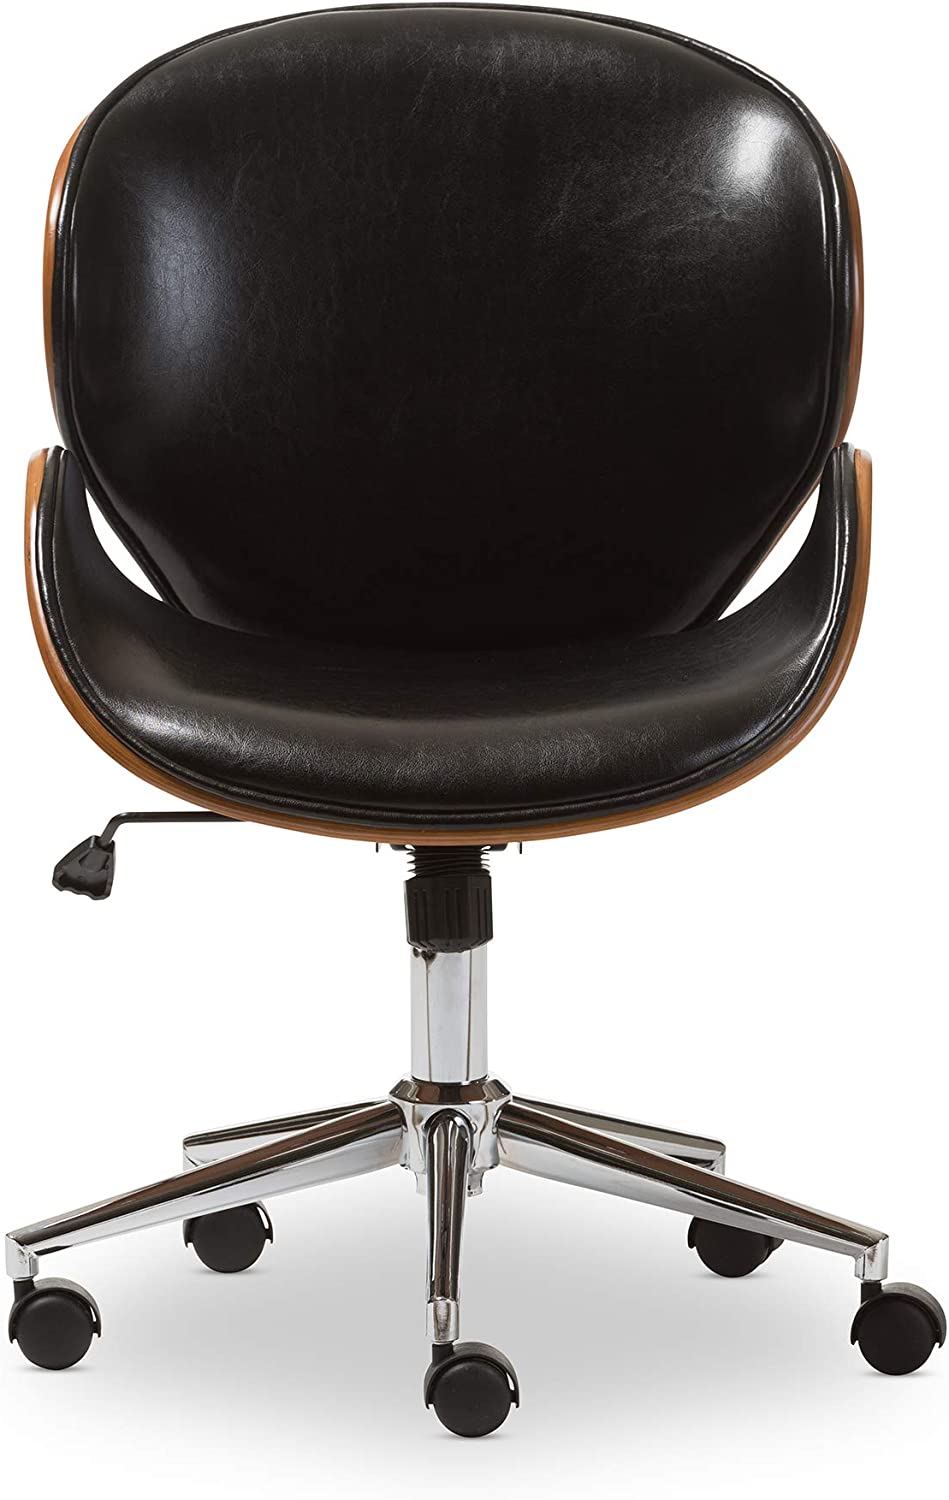 Baxton Studio Bruce Modern Office Chair, Walnut/Black